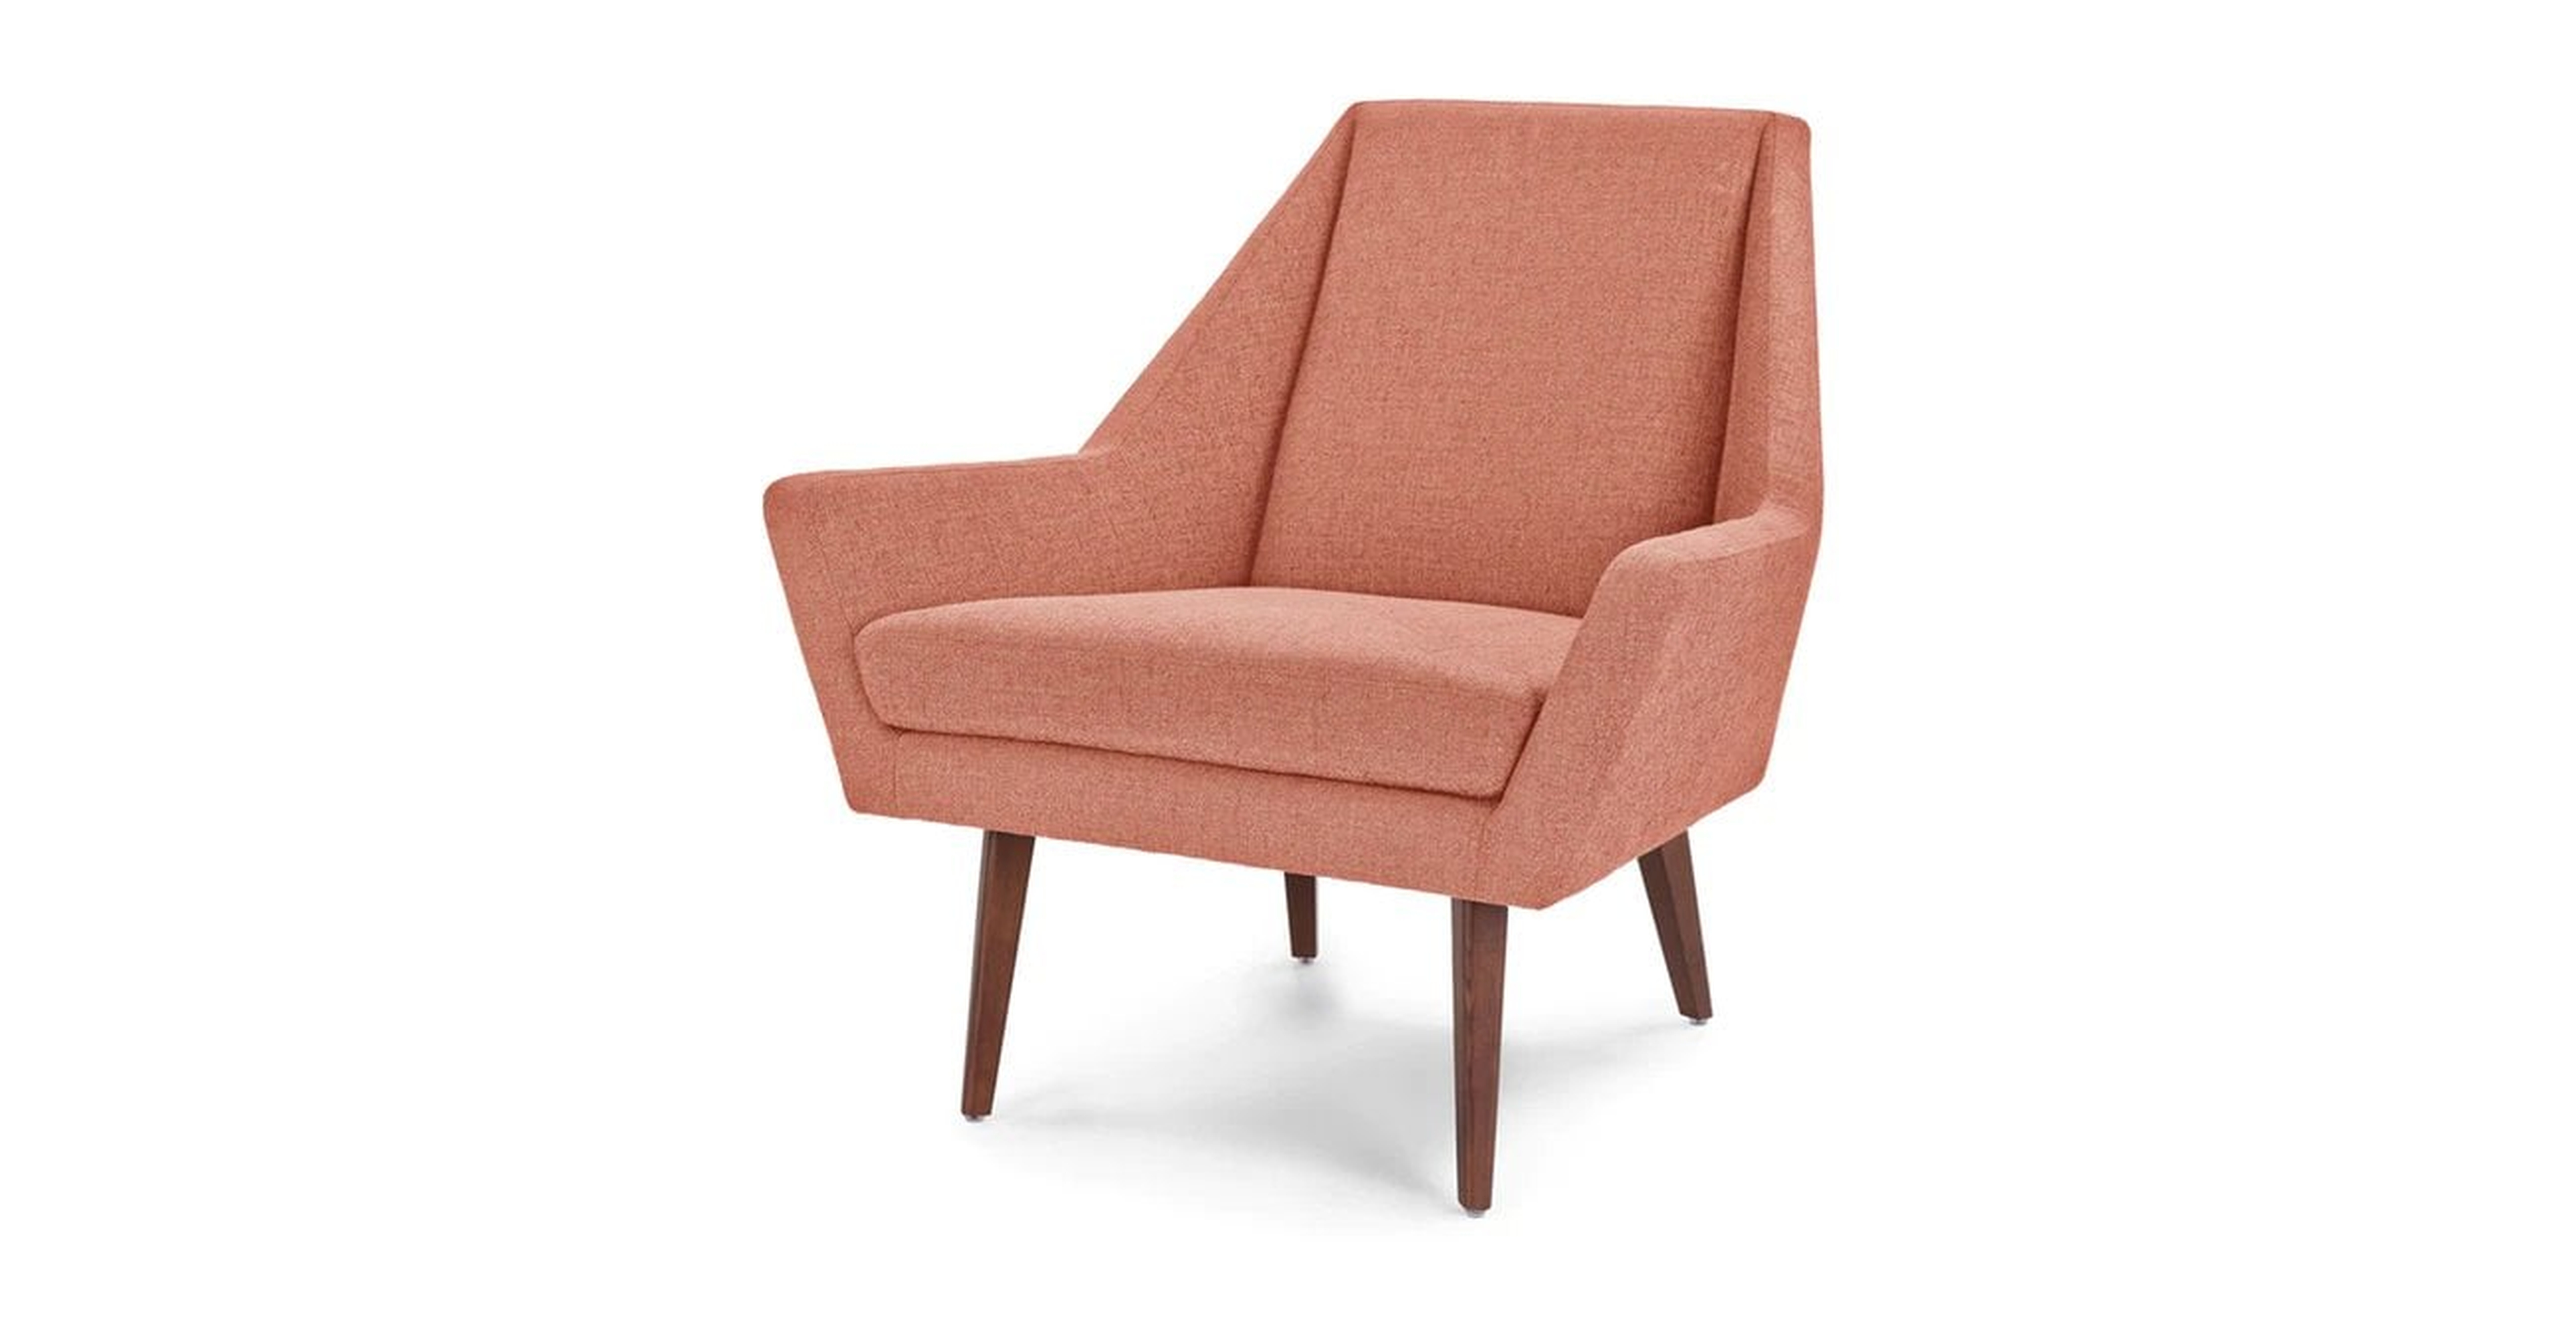 Angle Rosehip Orange Chair - Article